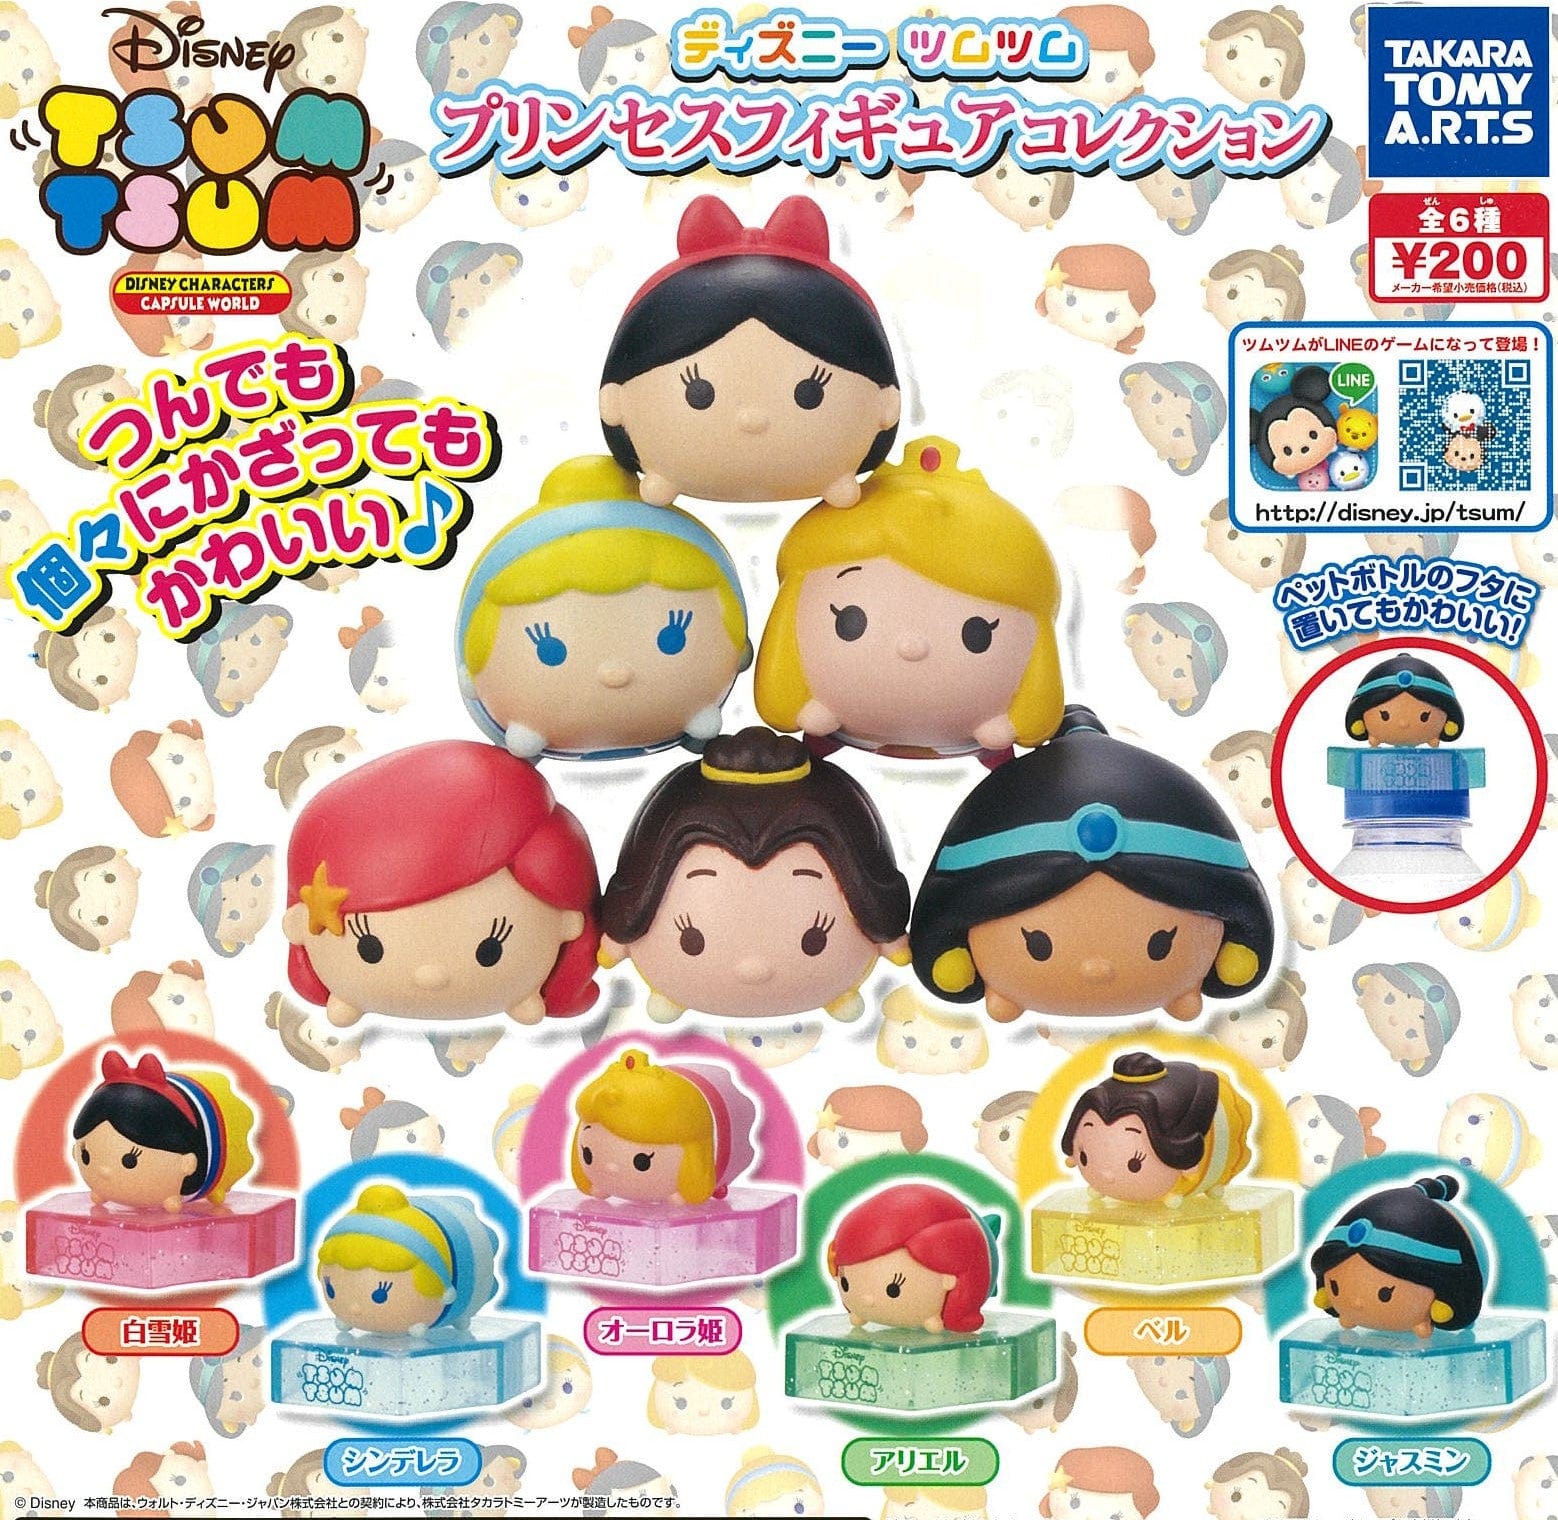 Takara Tomy A.R.T.S CP0106 - Disney Tsum Tsum Princess Figure - Complete Set